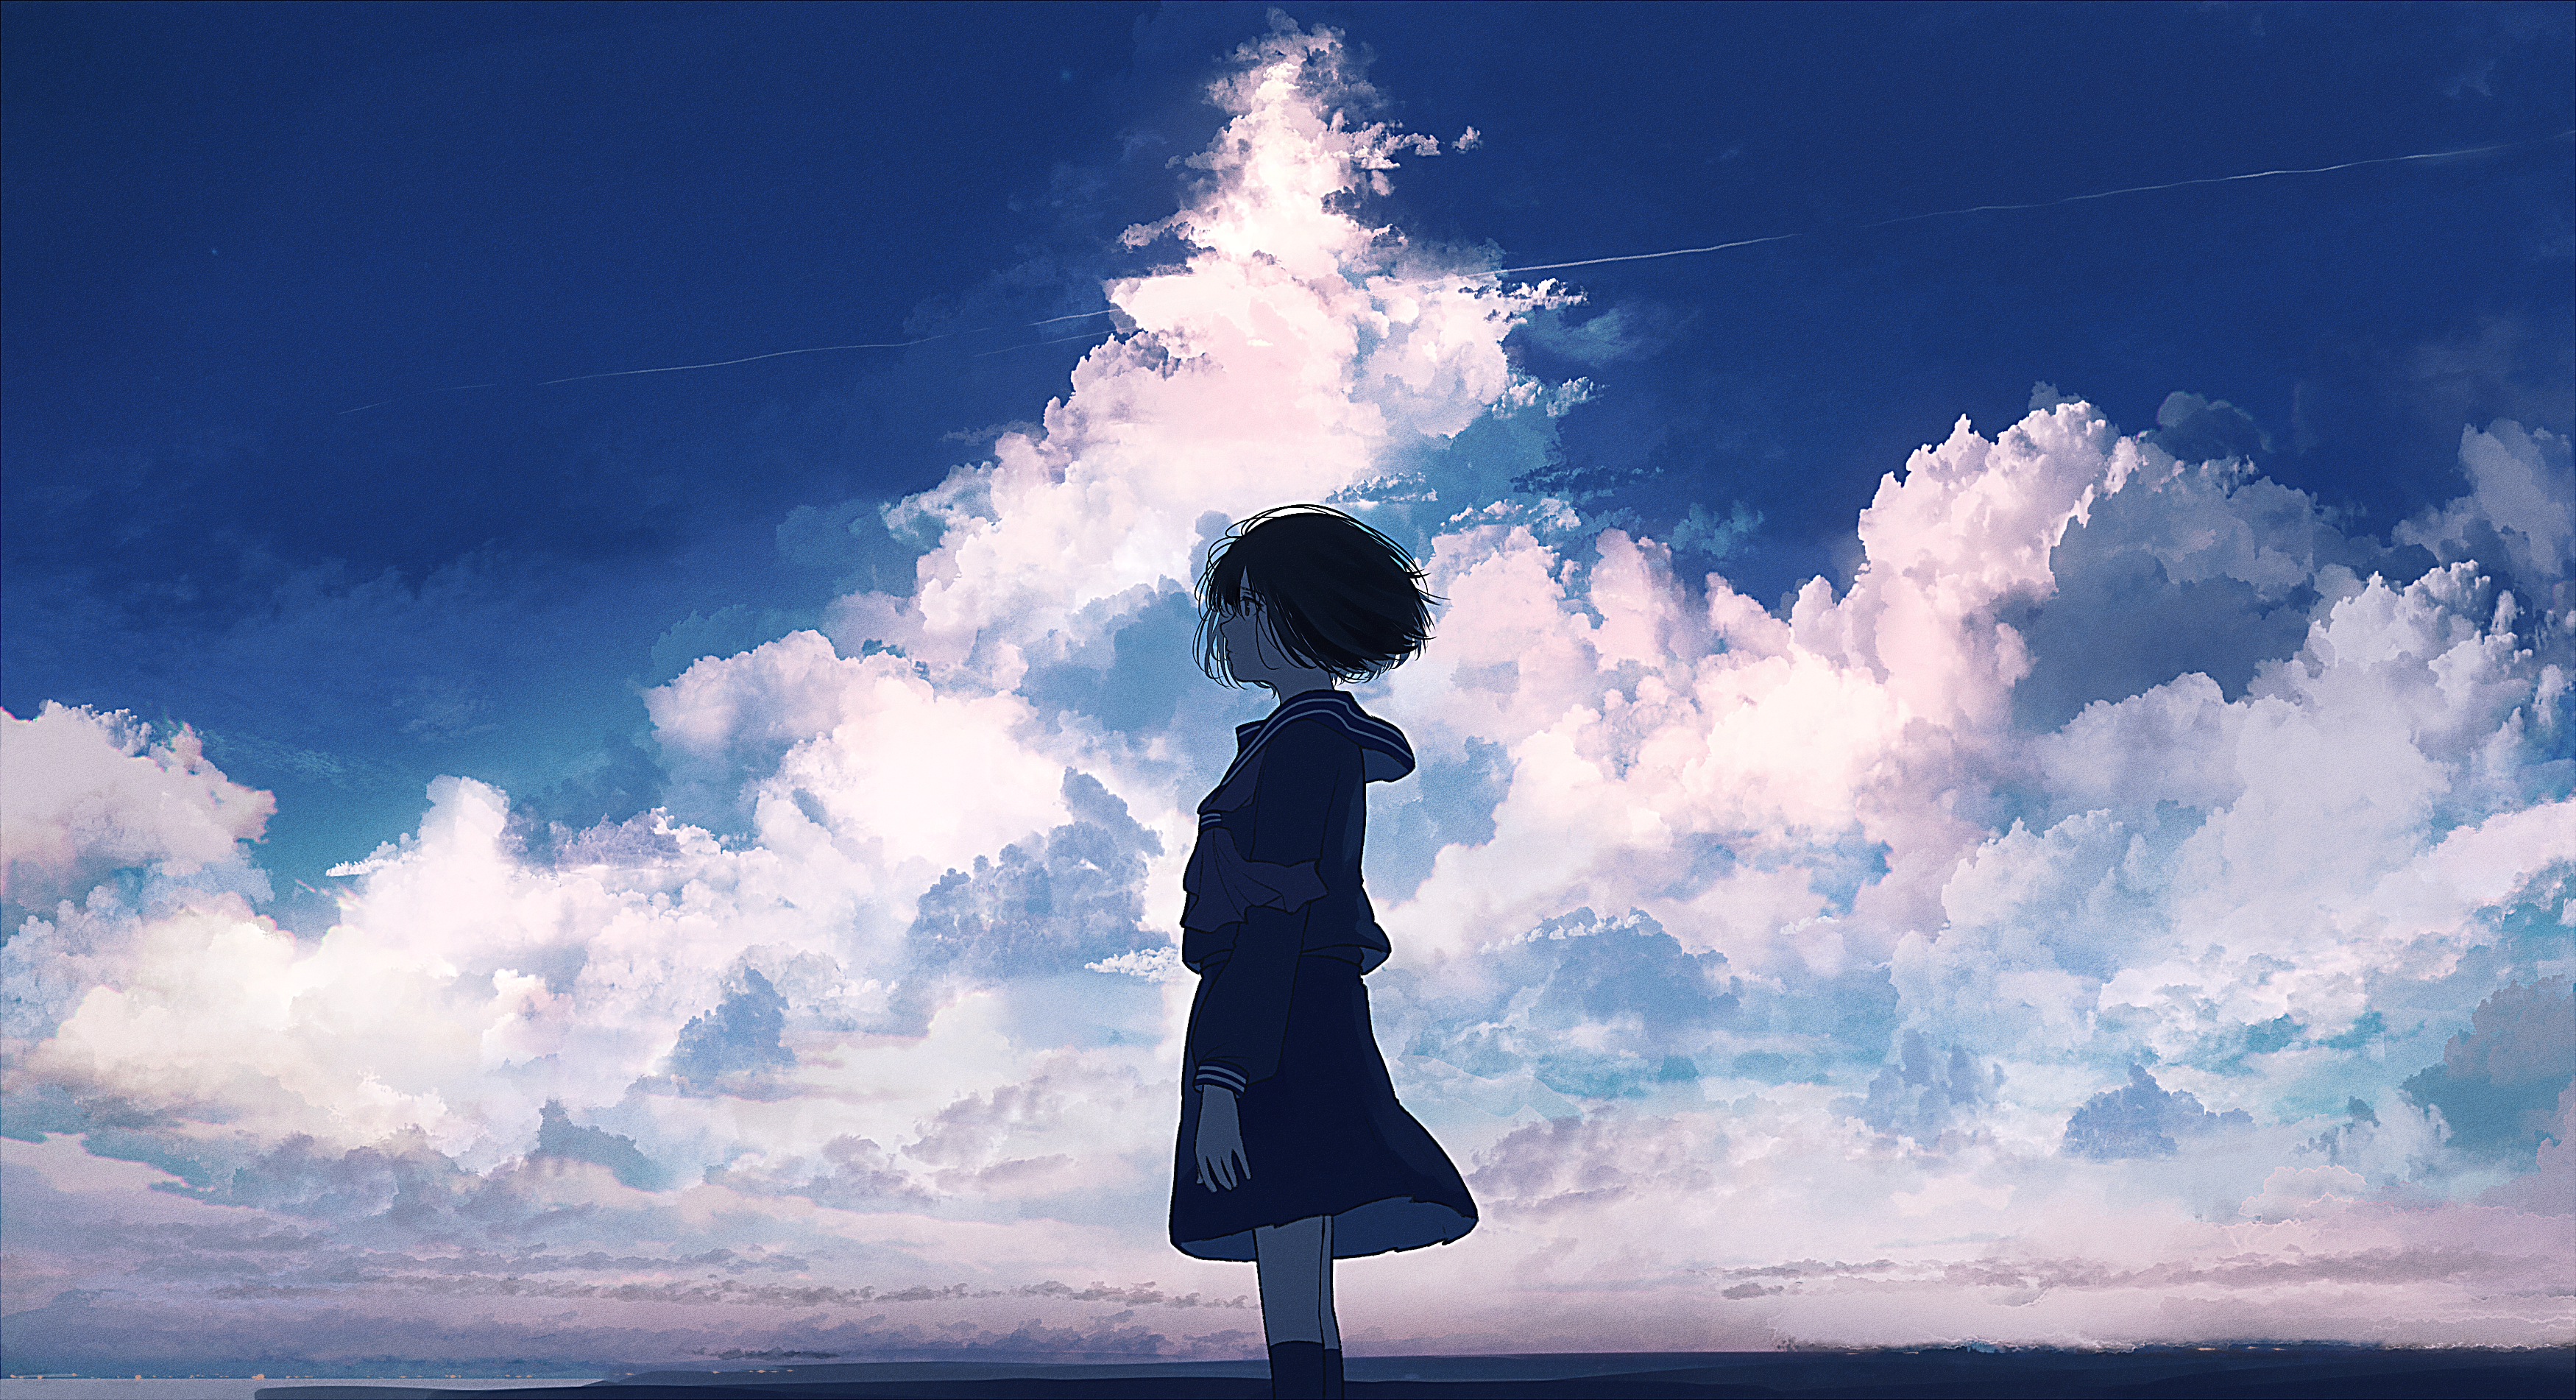 Anime Anime Girls Short Hair Black Hair Women Students Schoolgirl Uniform Landscape Clouds Digital D 3500x1902